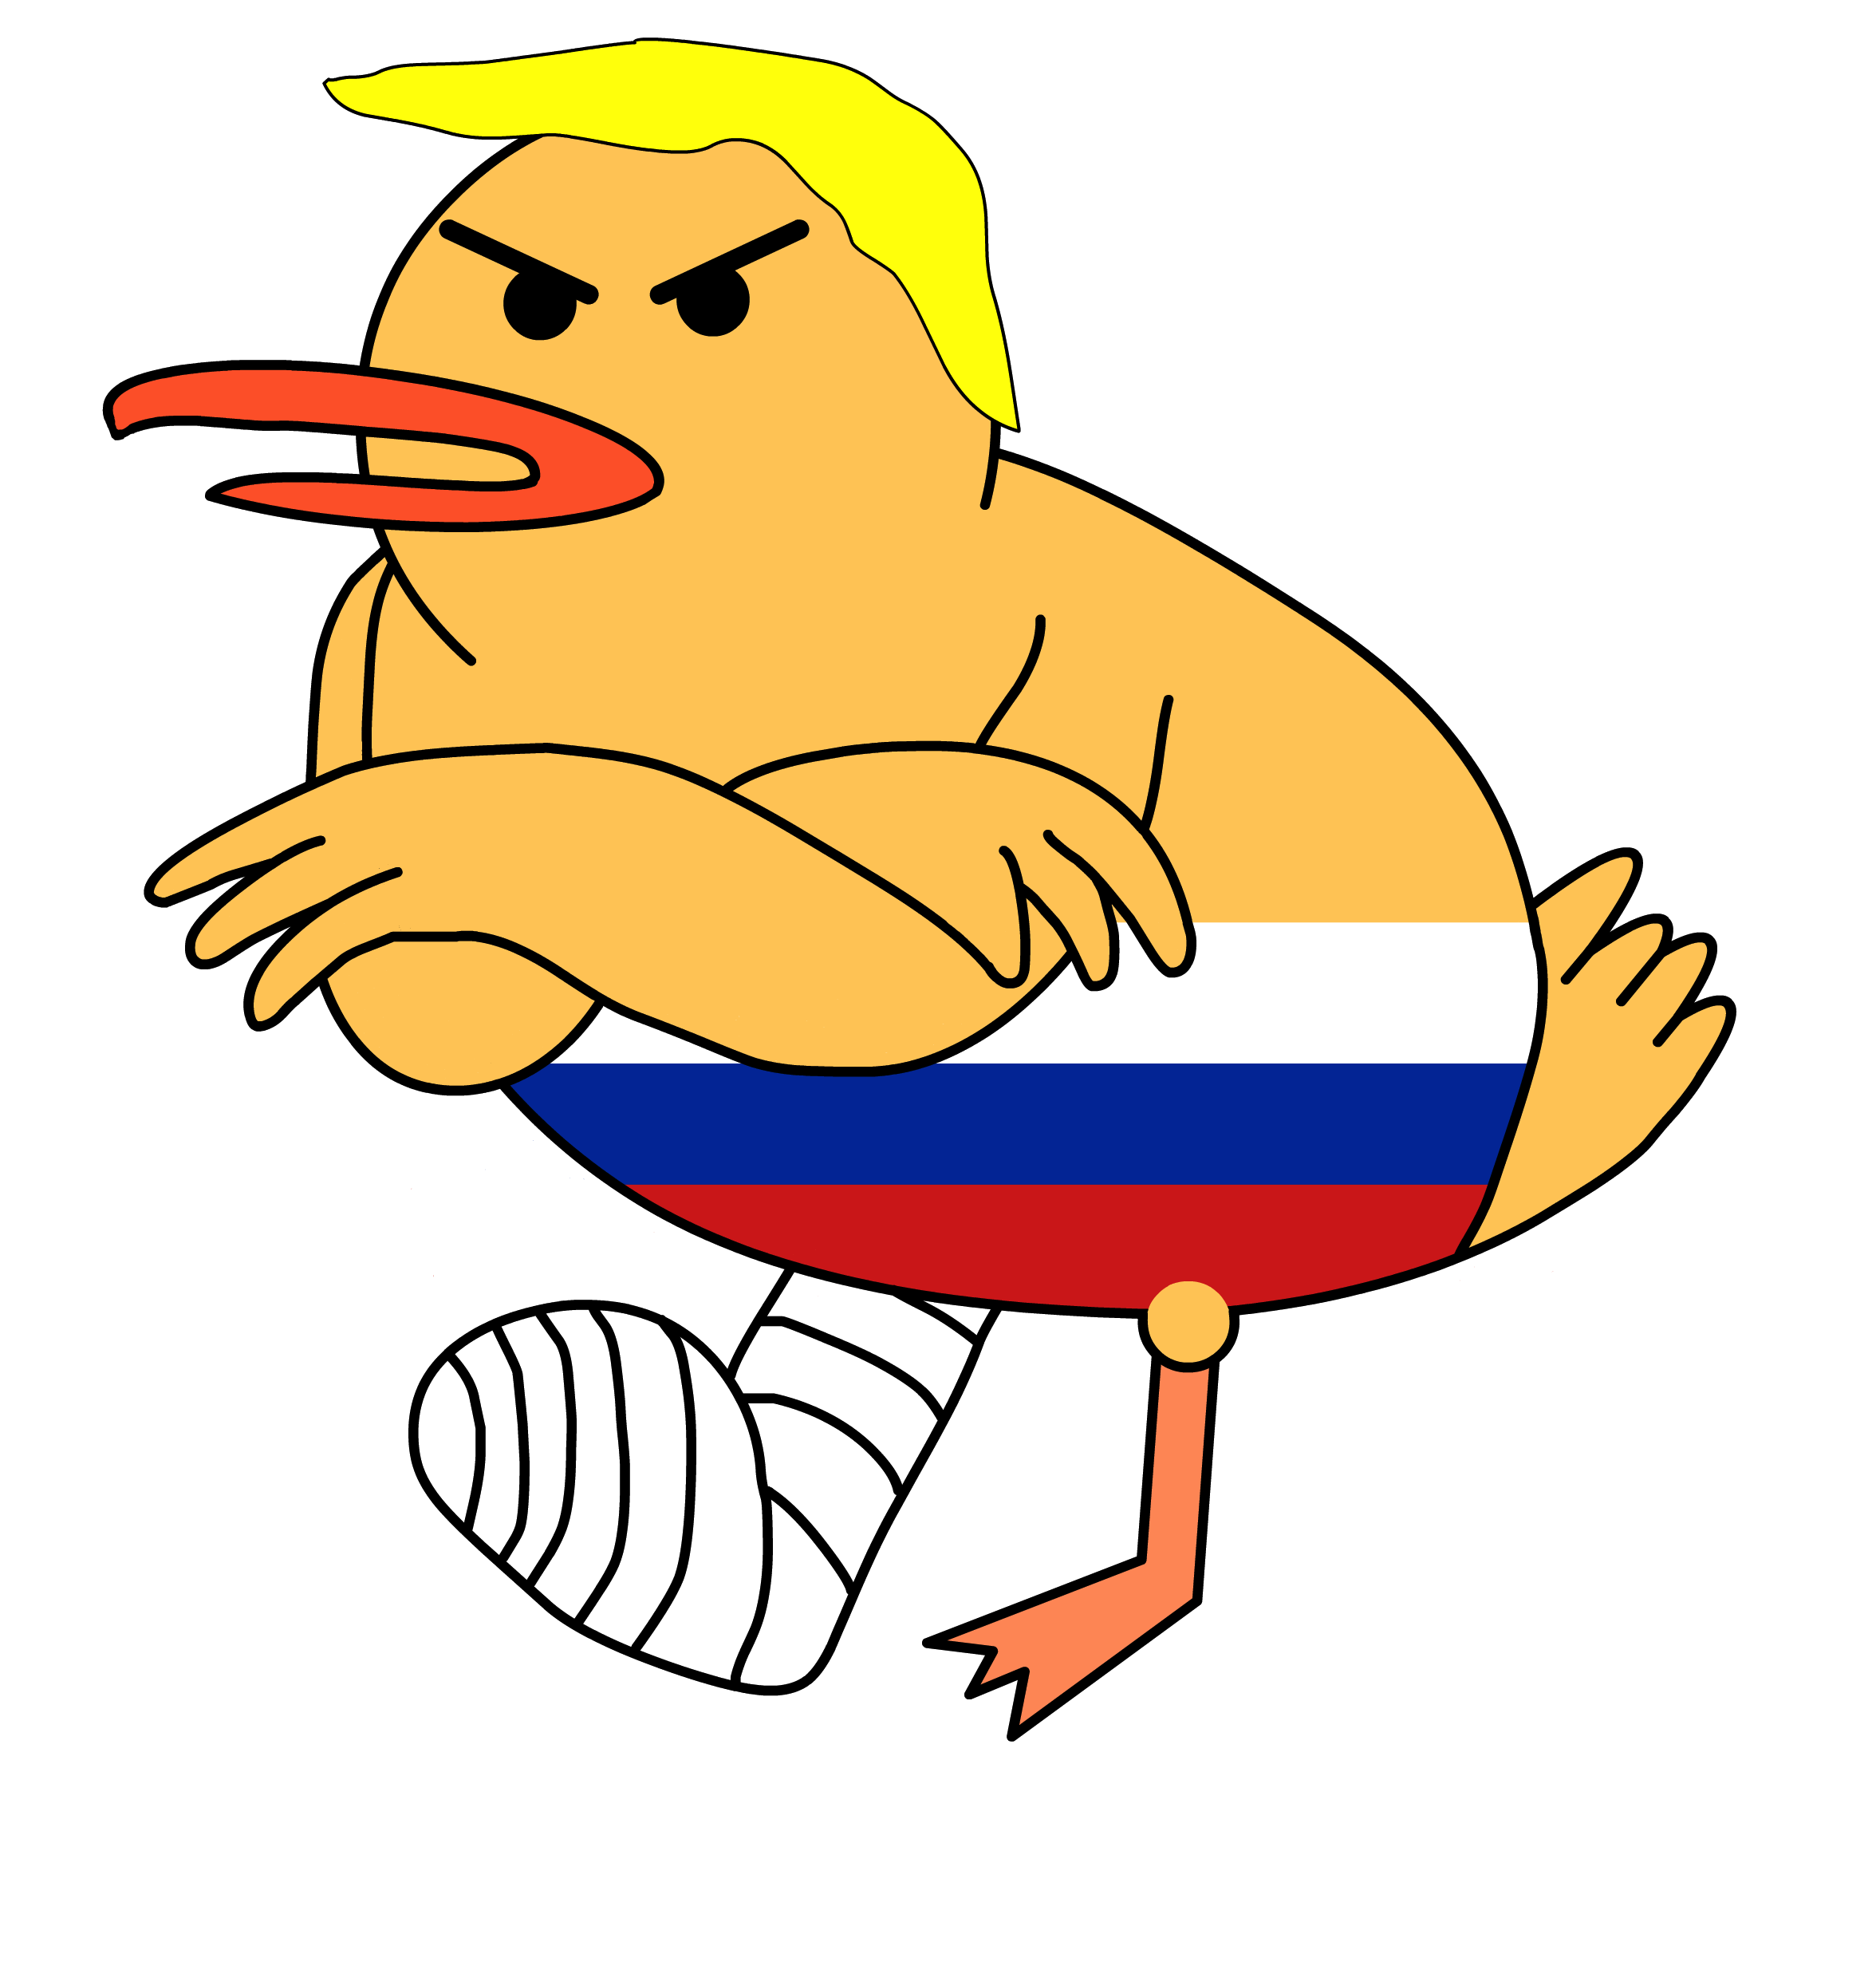 russia lame duck